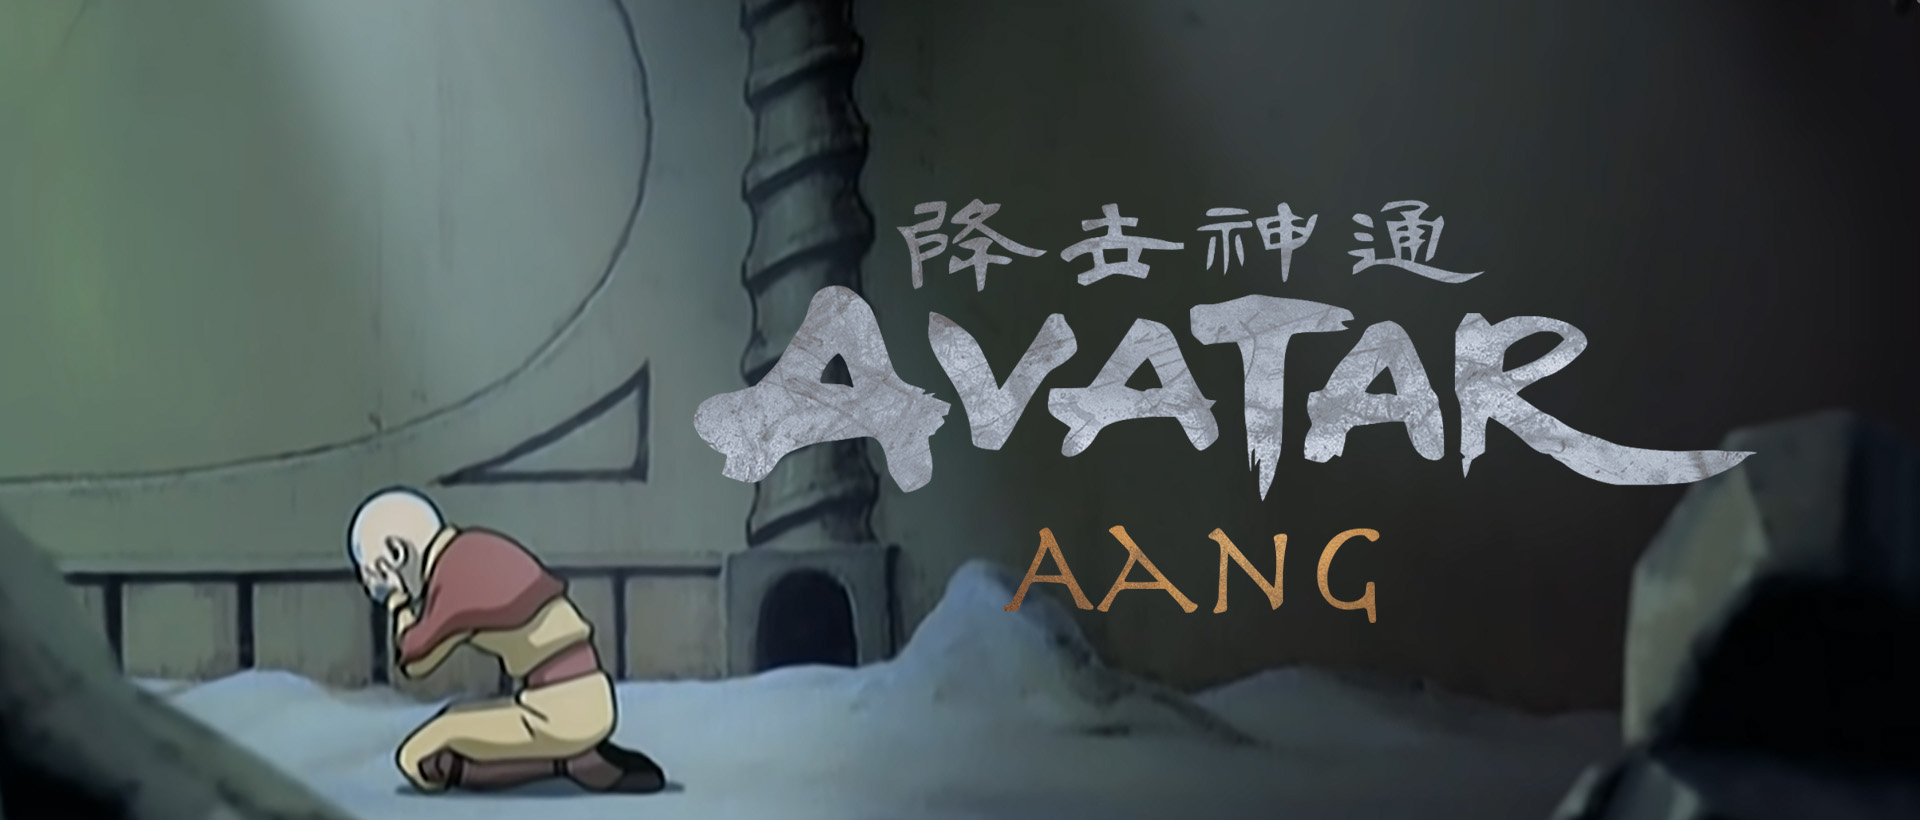 avatar aang movie released 2026 banner